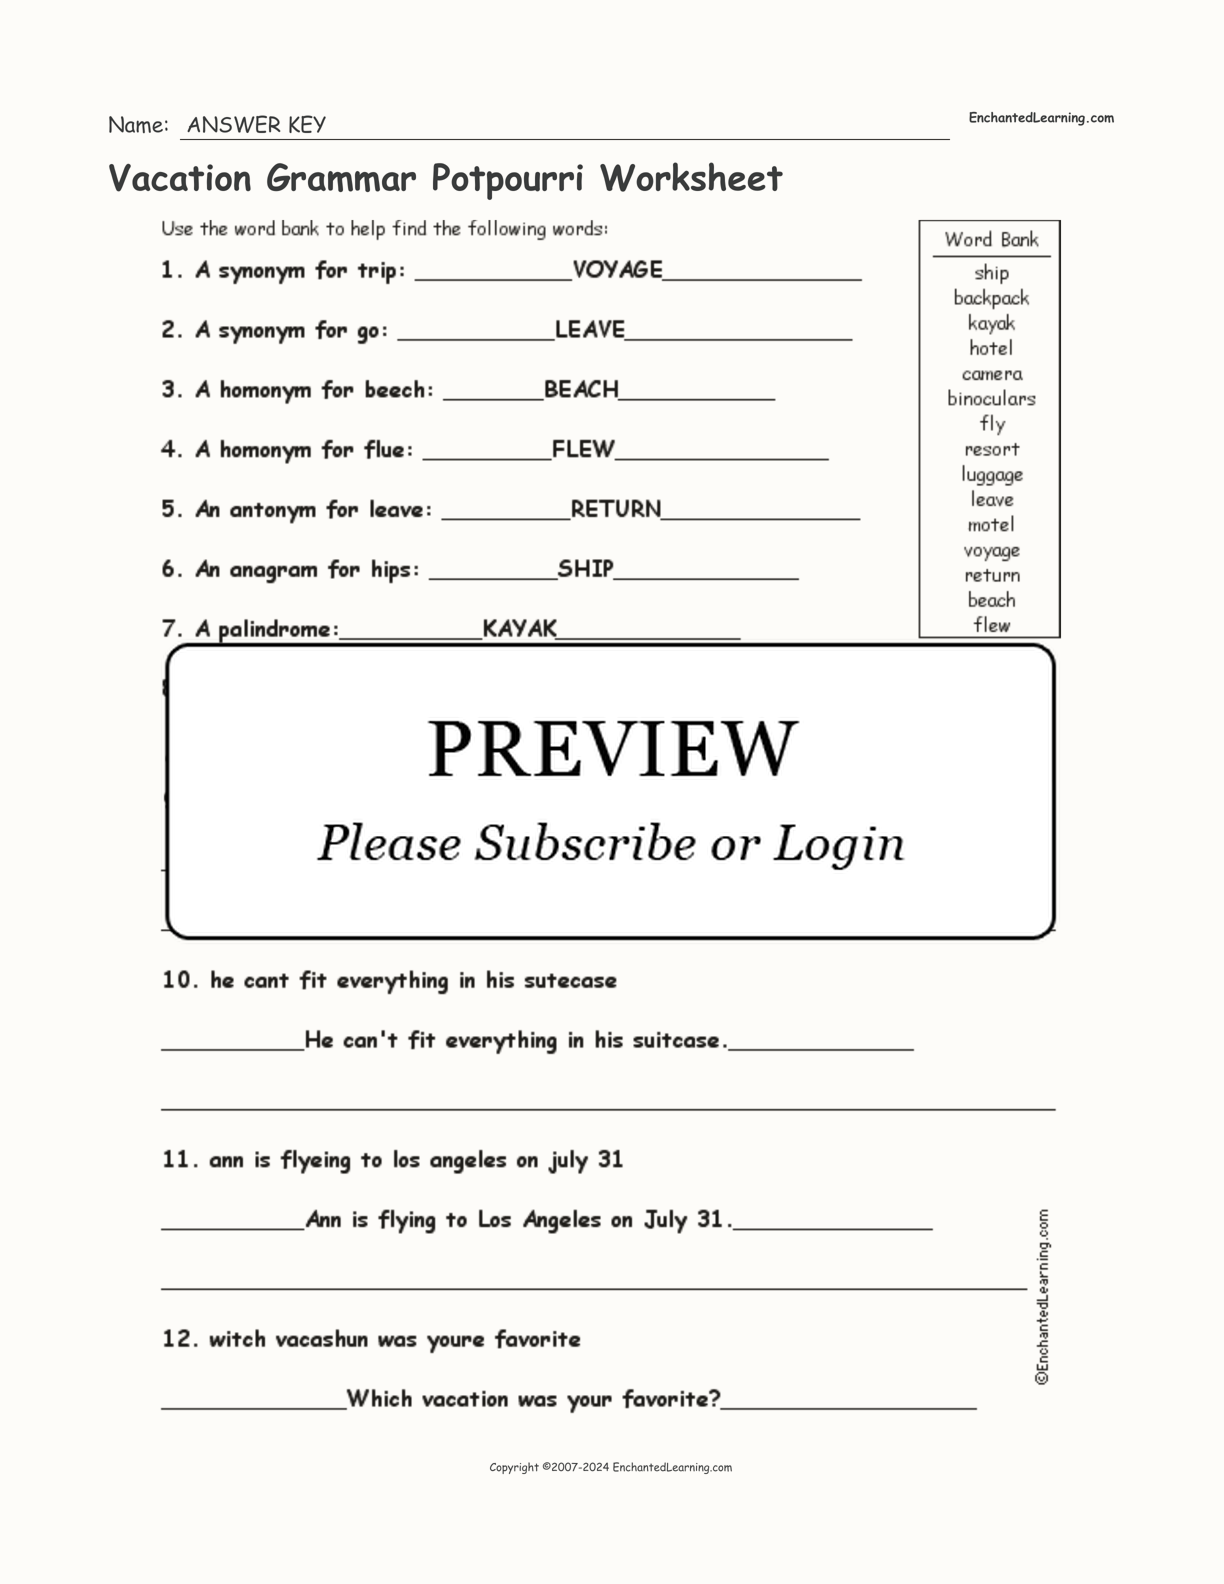 Vacation Grammar Potpourri Worksheet interactive worksheet page 2